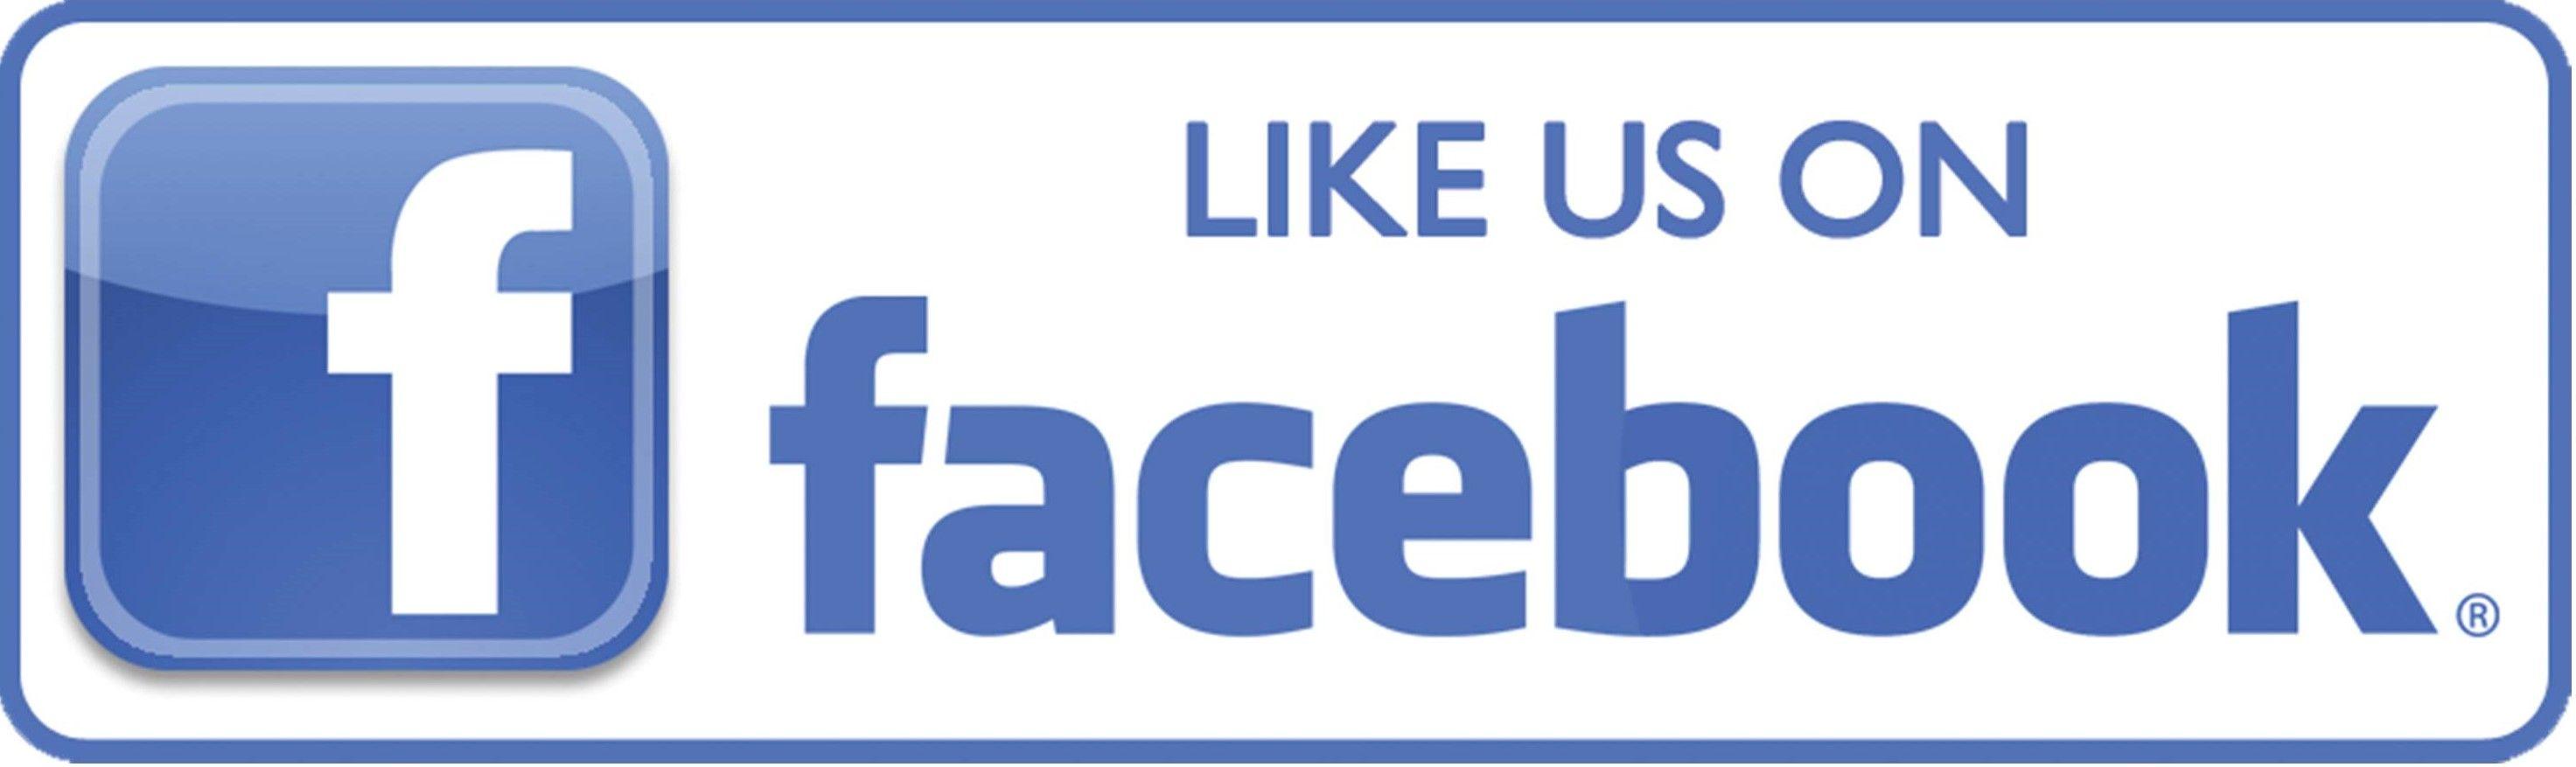 Find Us On Facebook Official Logo - Official facebook Logos